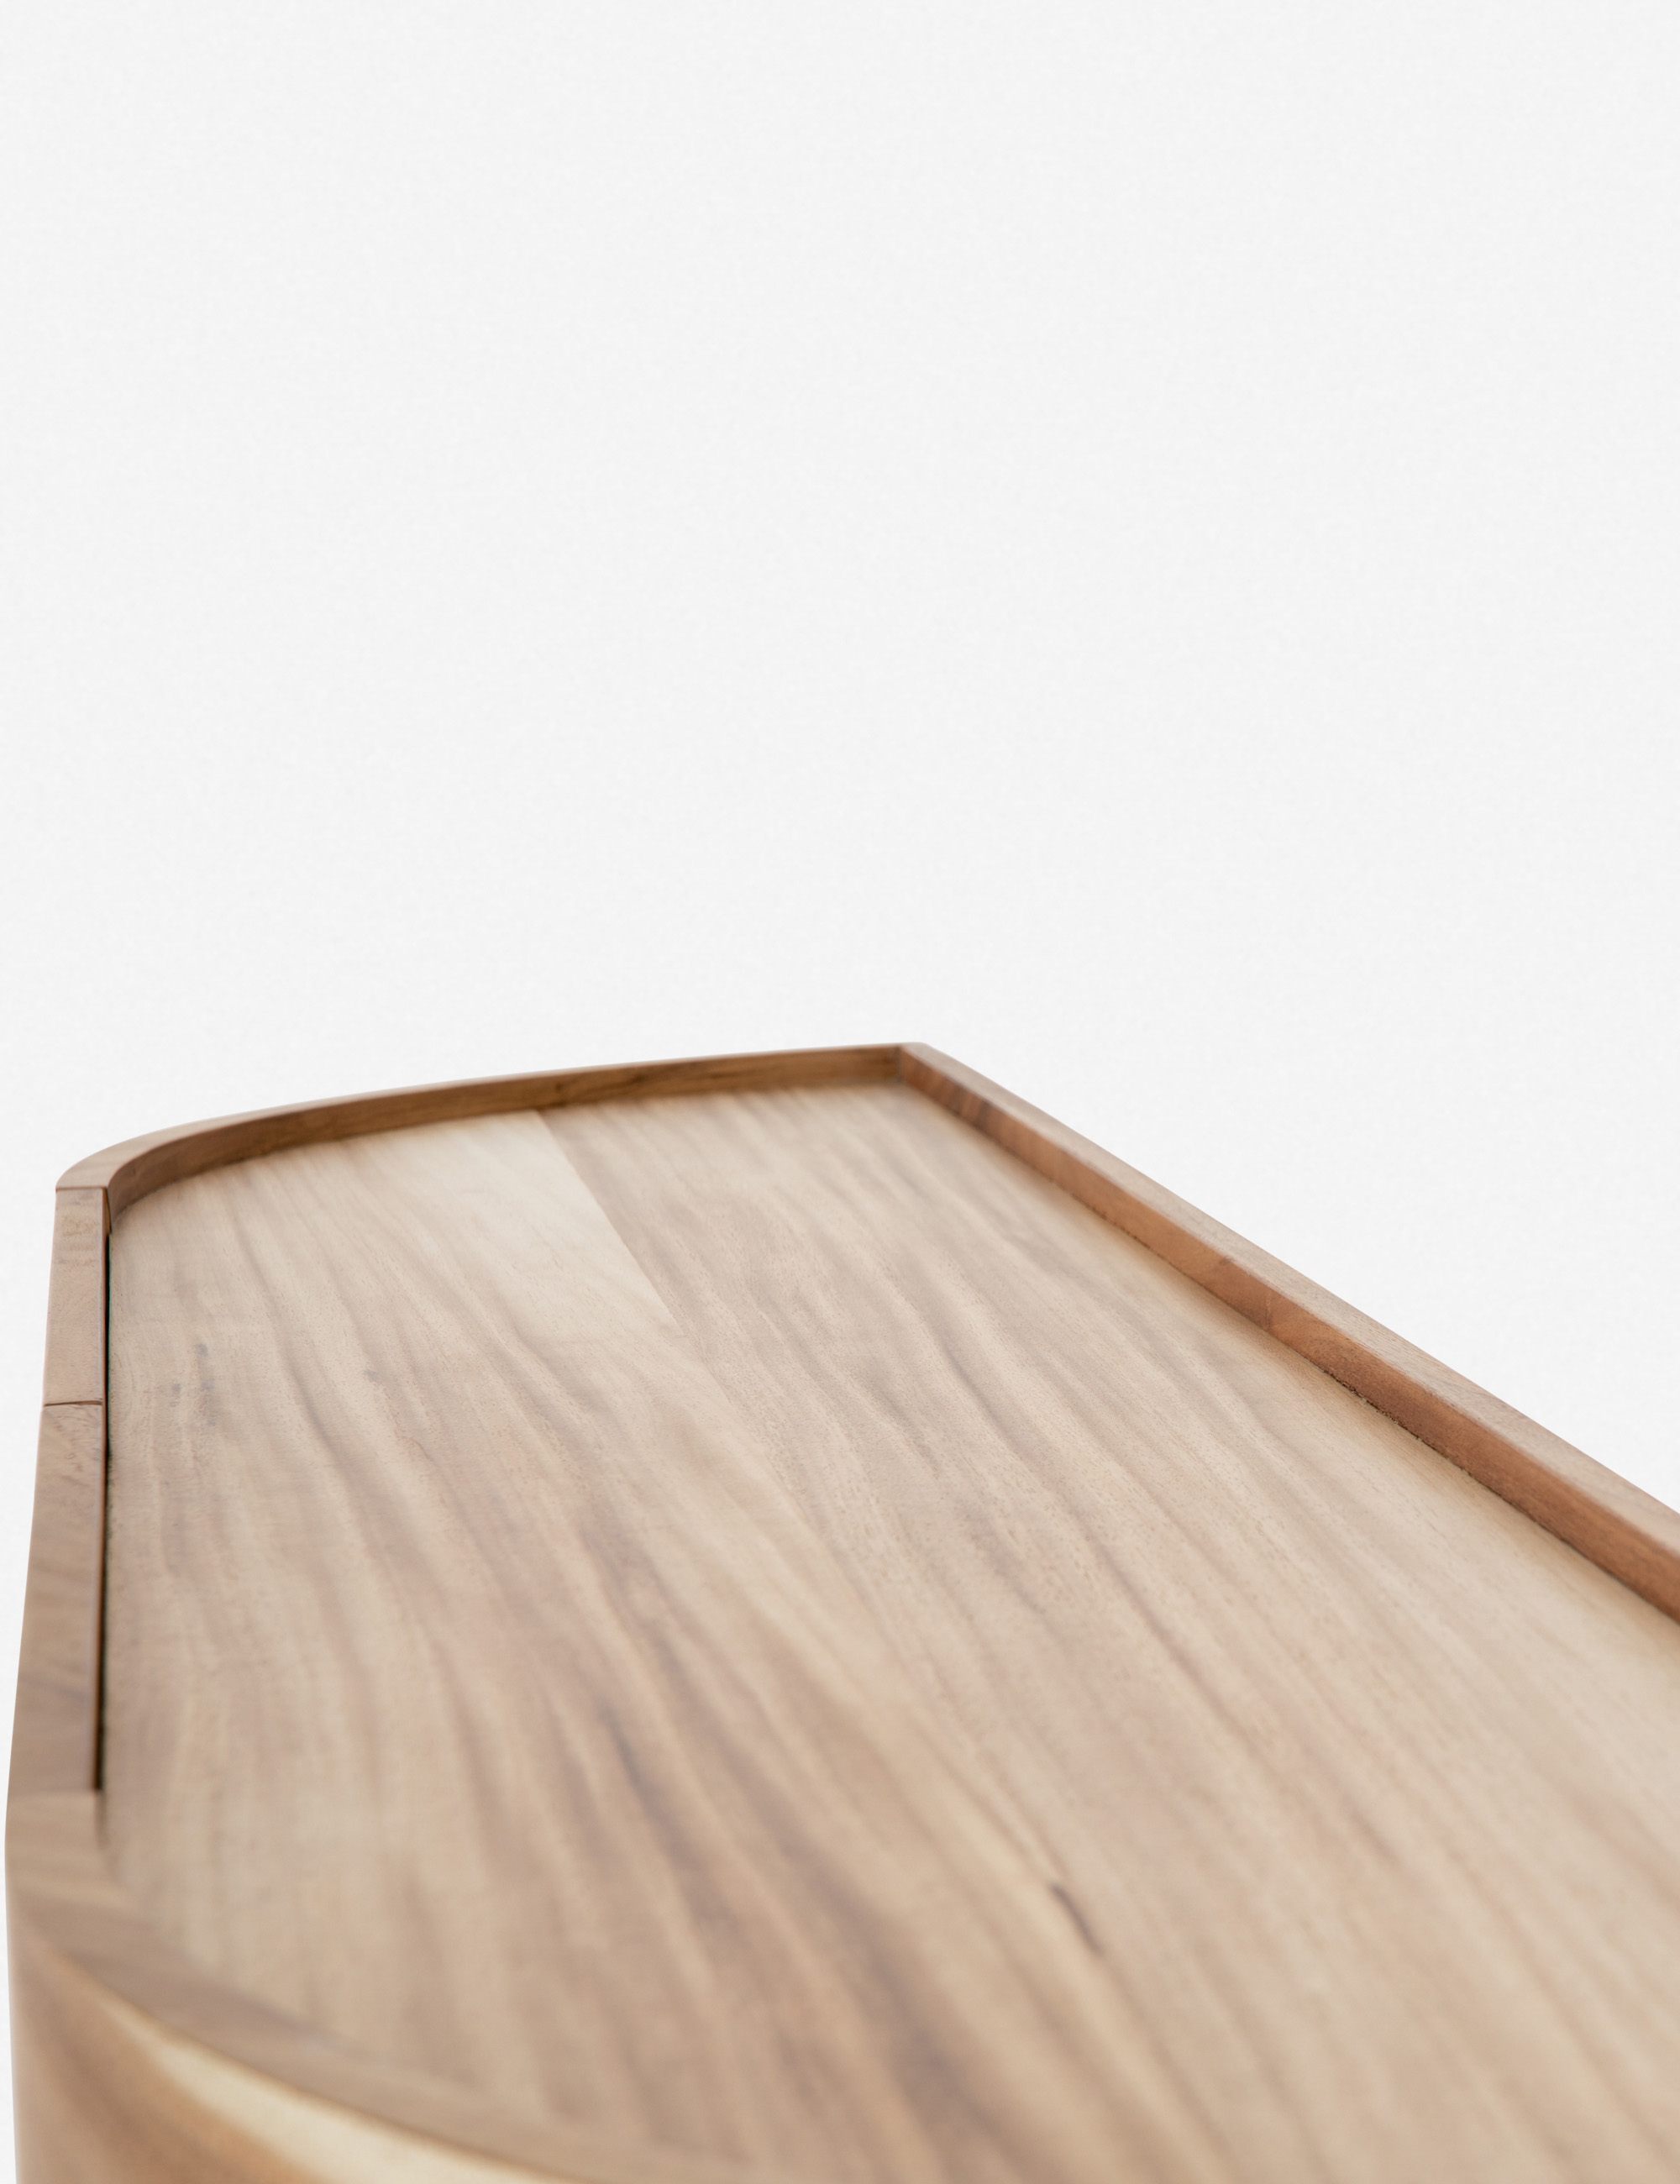 Nausica Sideboard, Reclaimed Oak - Image 5